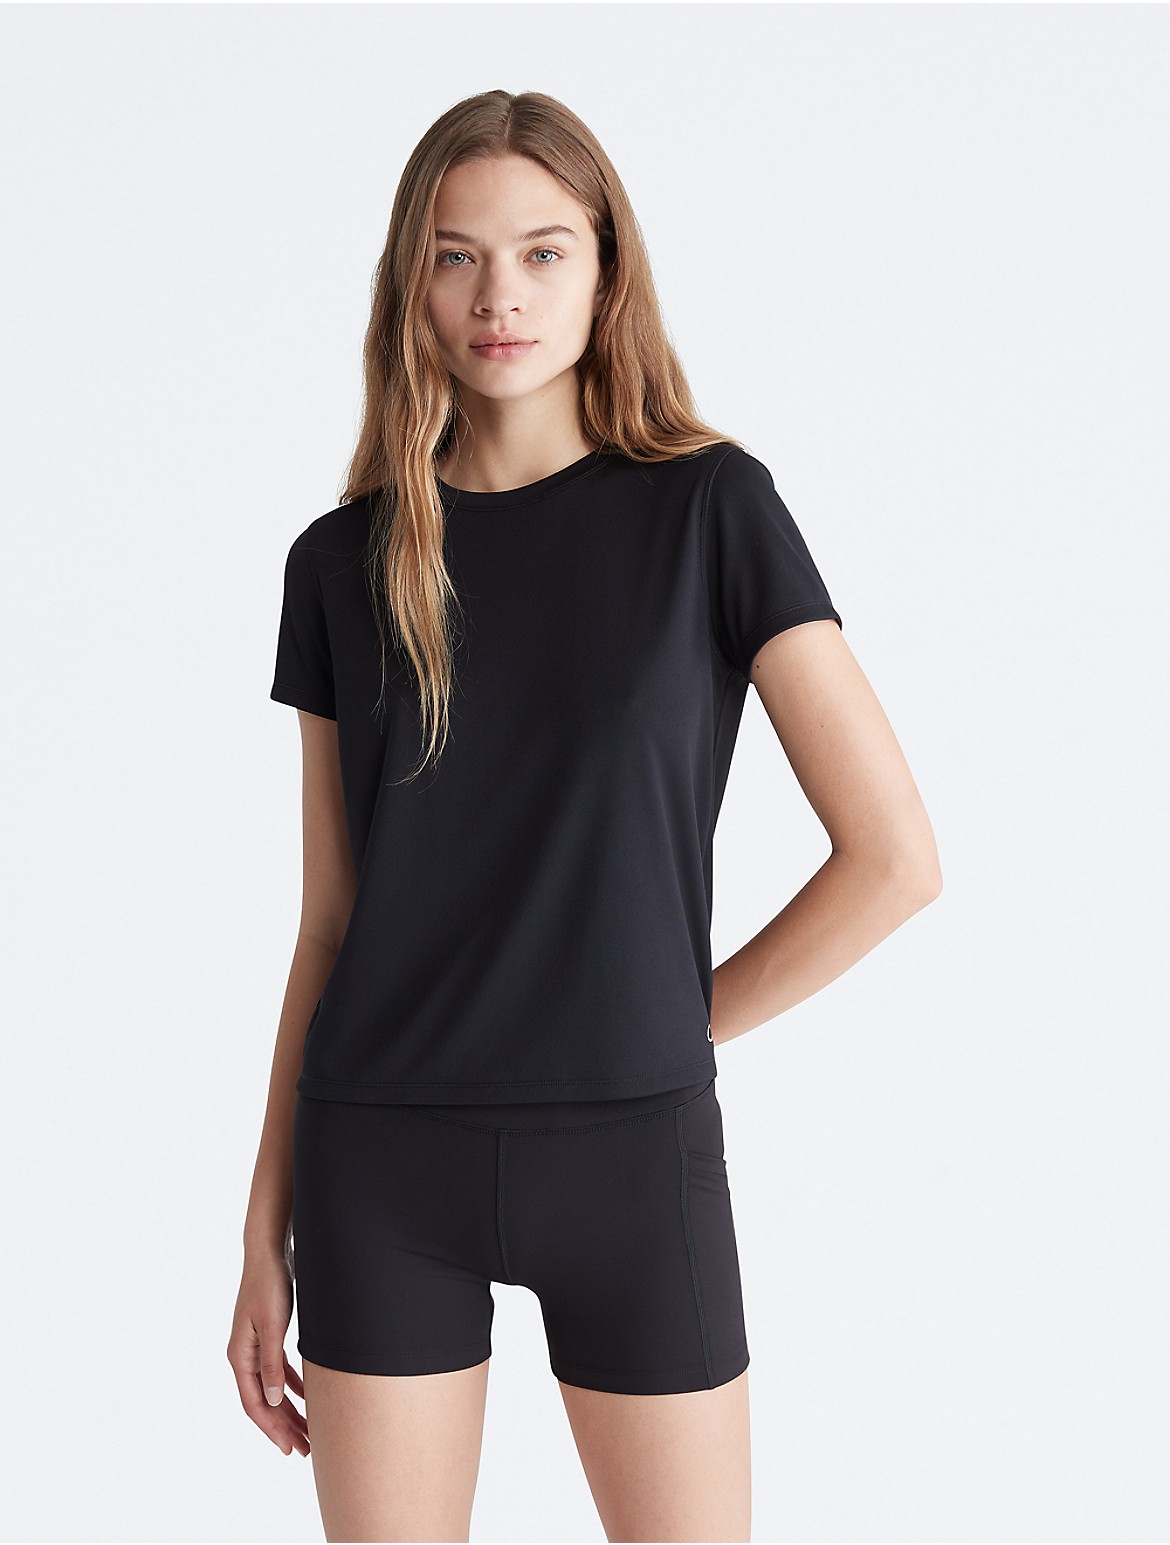 Calvin Klein Women's Performance Tech Pique T-Shirt - Black - L